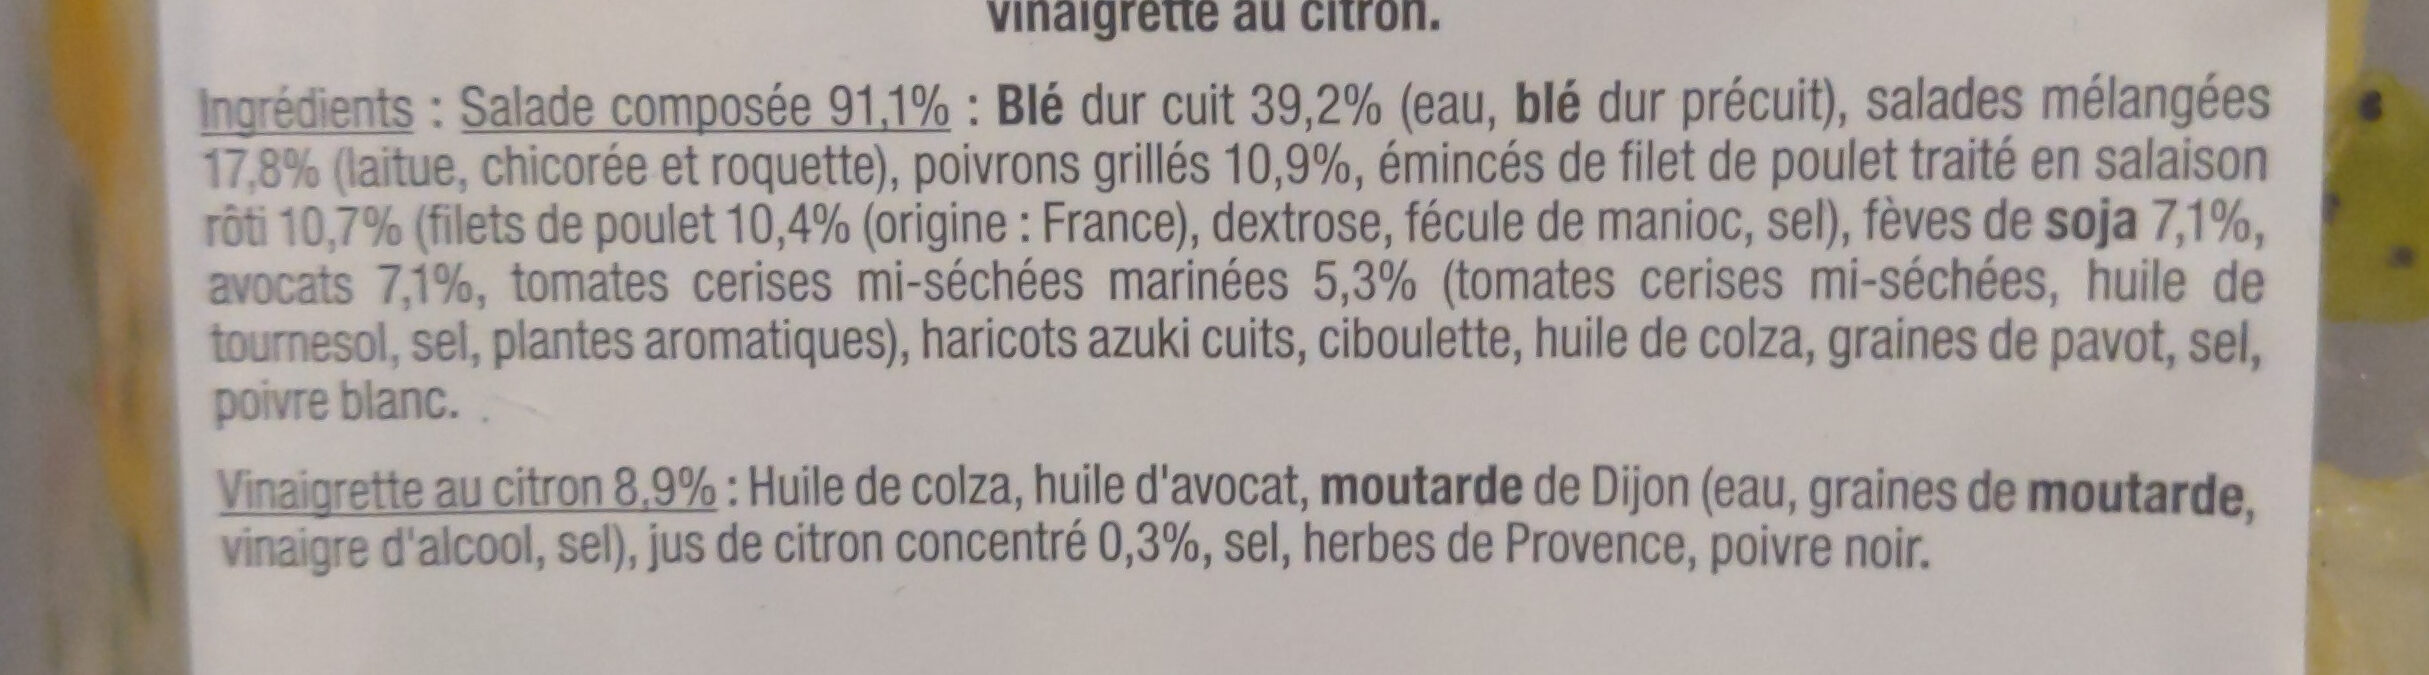 Salade Poulet Avocat fèves de soja et tomates mi-séchées - Ingrediënten - fr